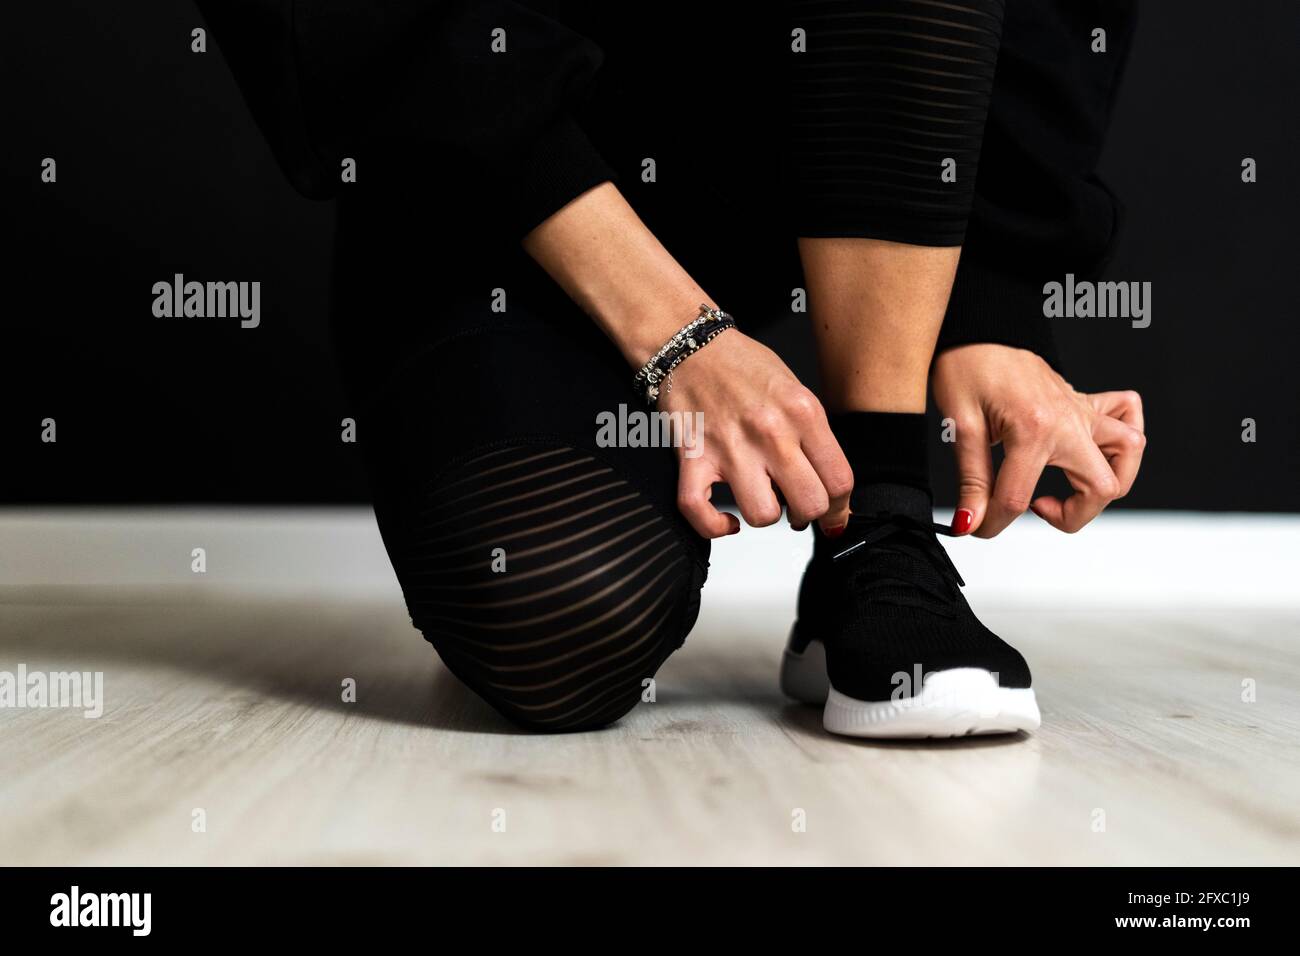 Female sportsperson tying shoelace Stock Photo